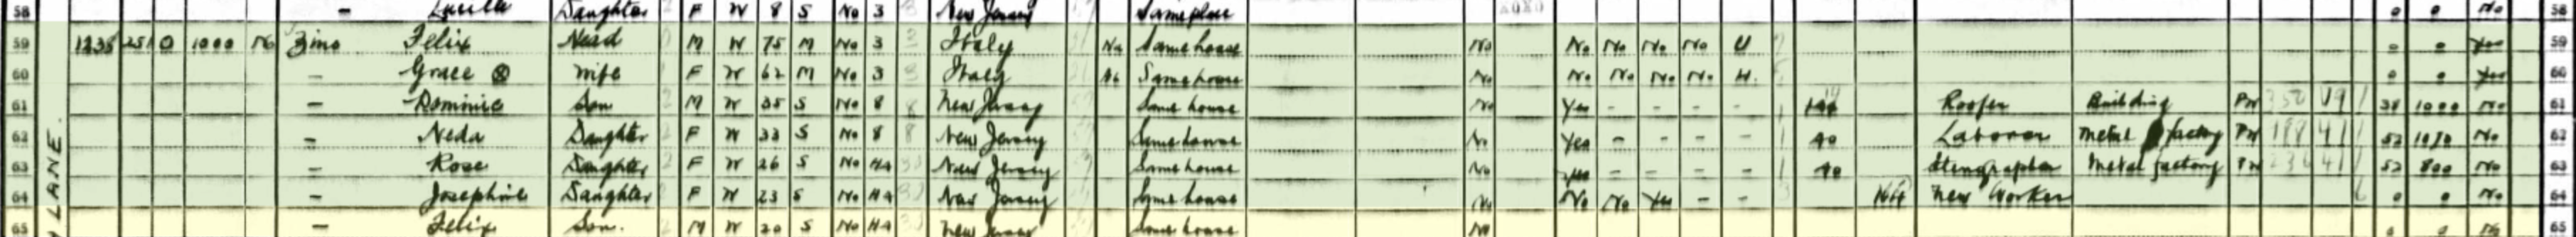 1940 Census Zino Family